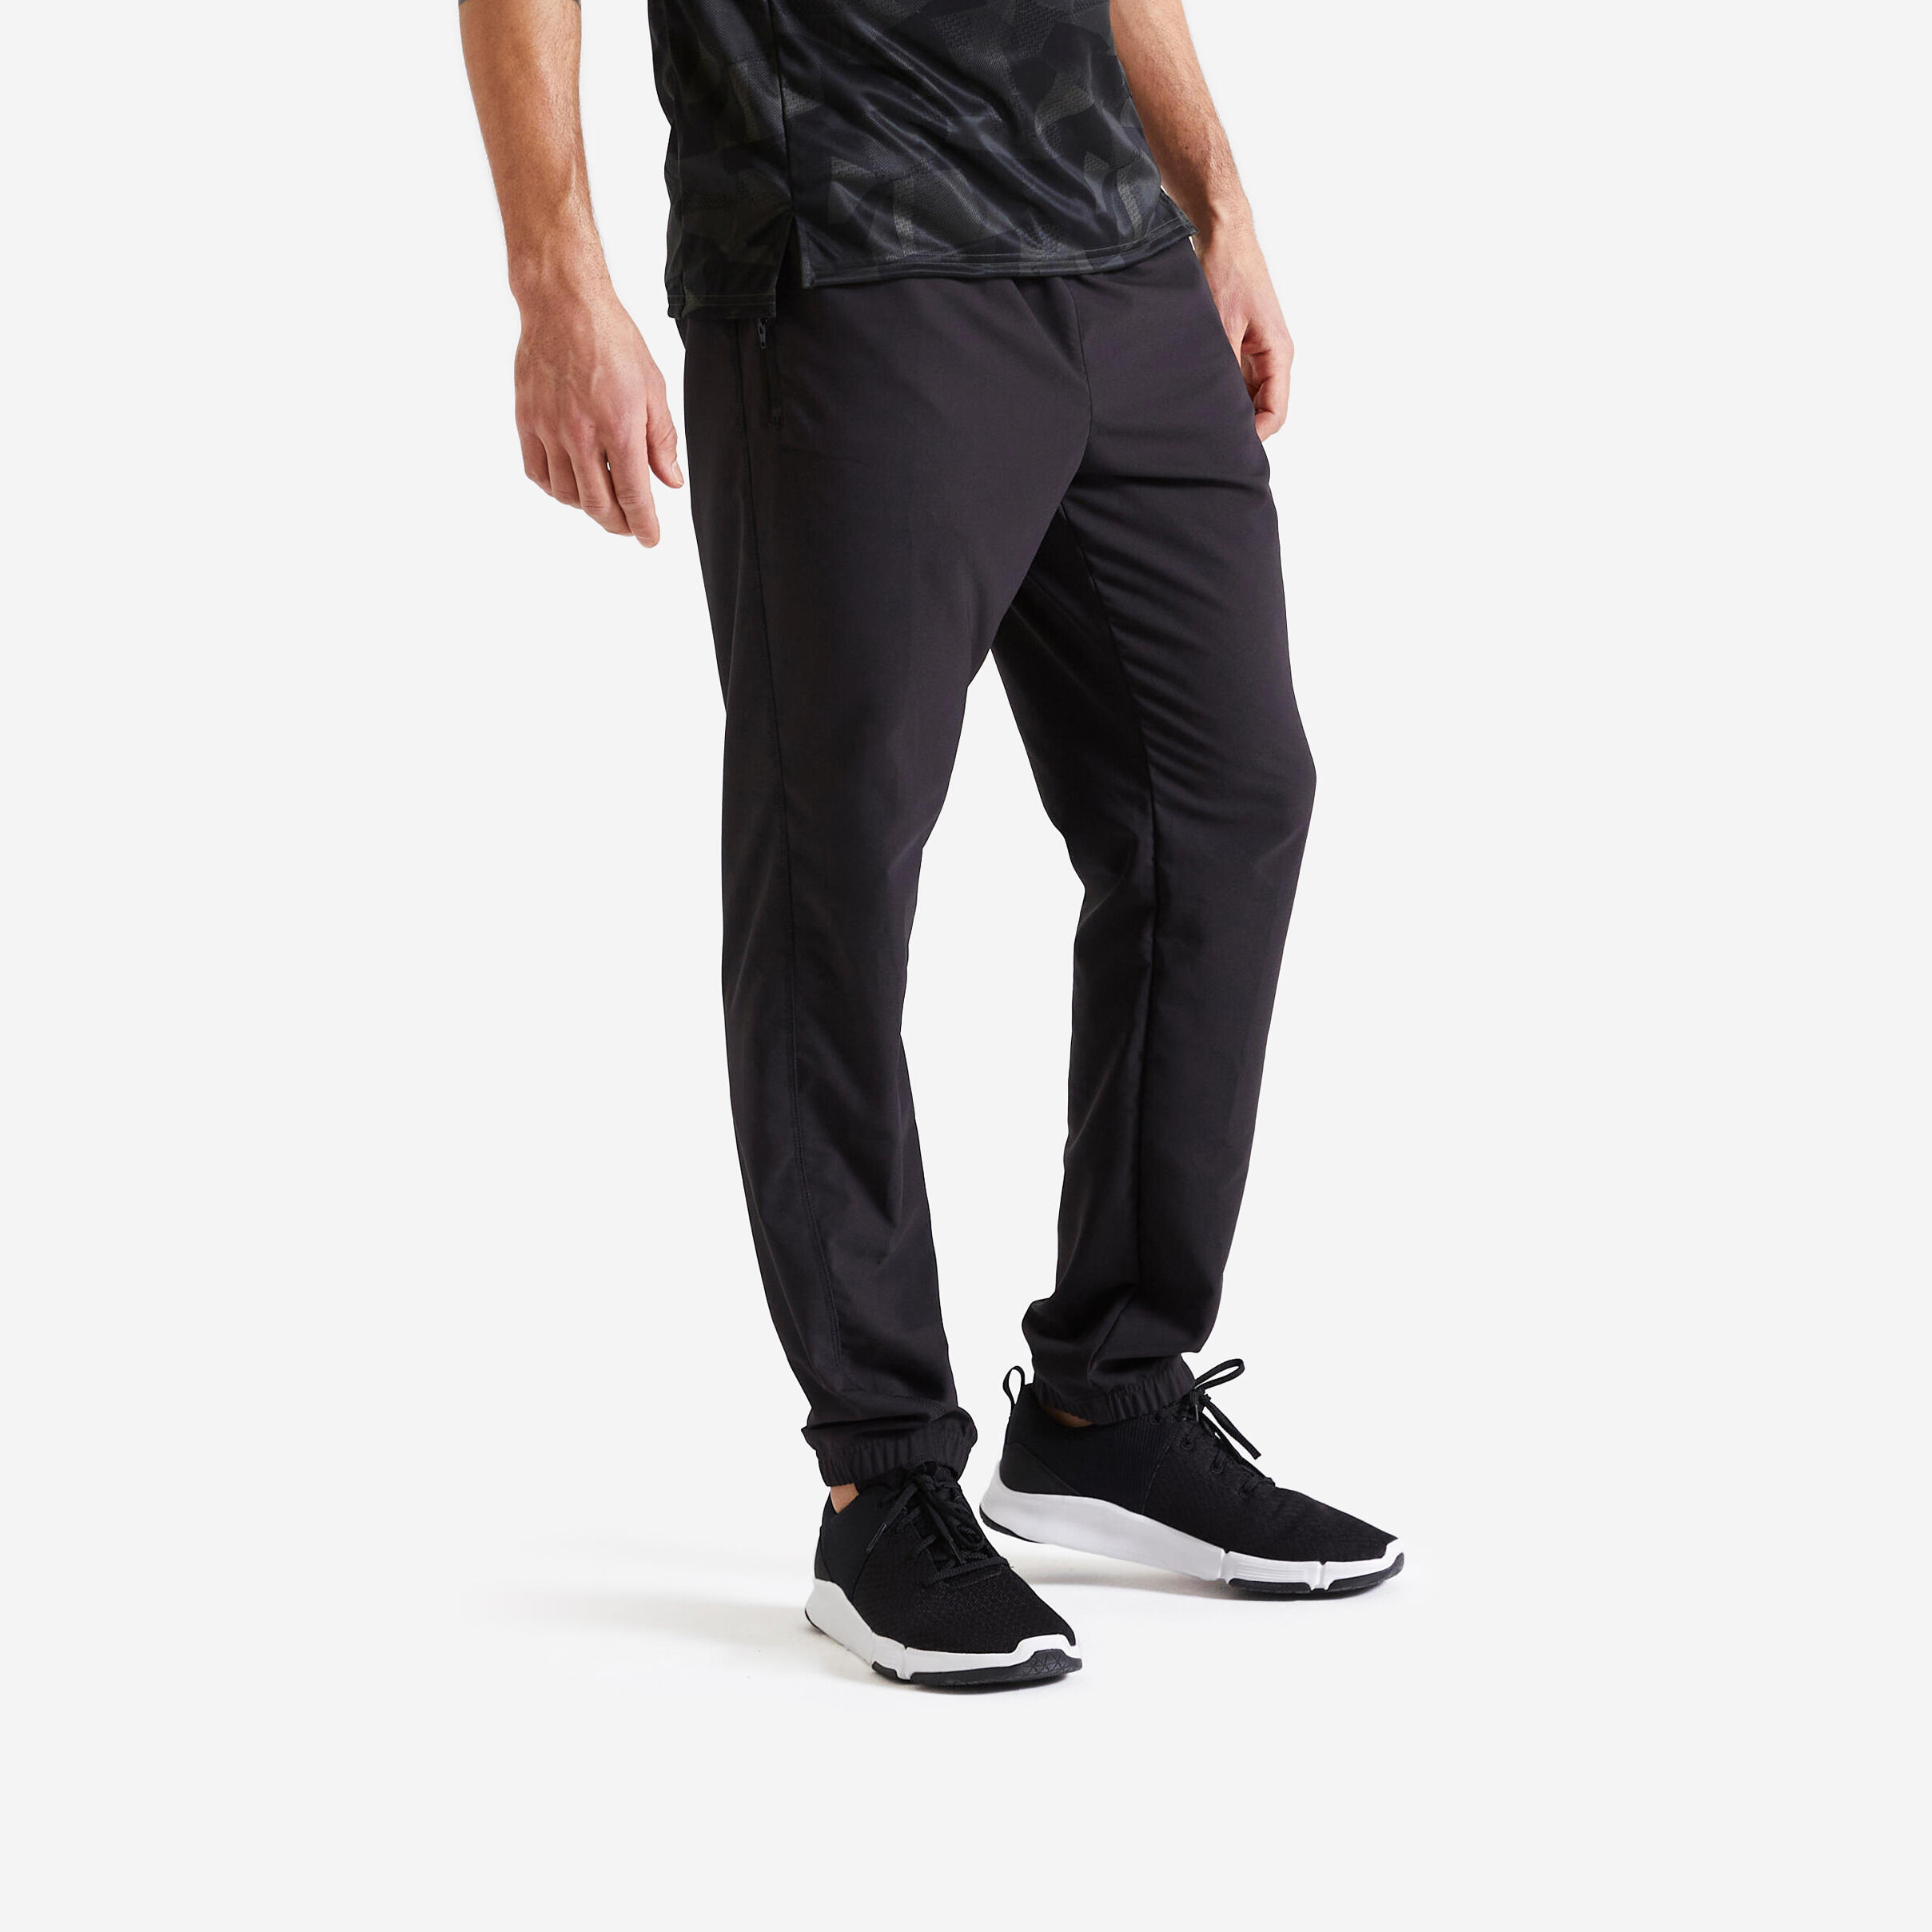 Men's Warm Fitness Pants - 100 Black - Black - Domyos - Decathlon